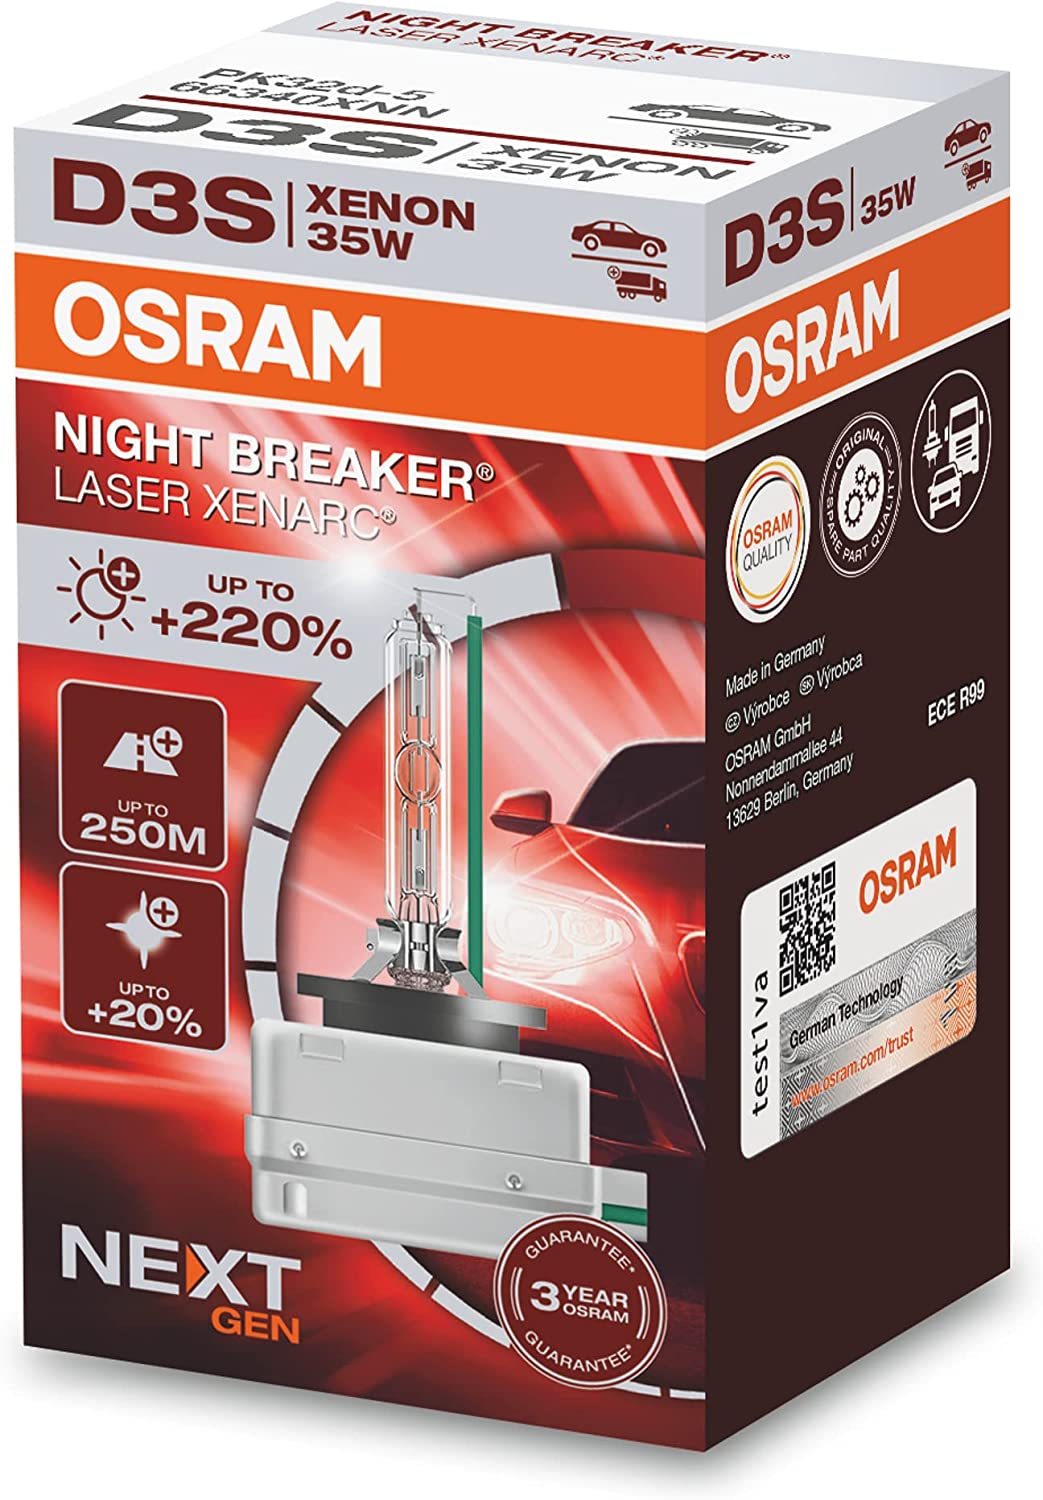 Diversity Retaliate amount of sales 1x Xenon bulb D3S OSRAM NIGHT BREAKER LASER (NEXT GEN) Xenarc - 35W +220%  66340XNN 3-year warranty - France-Xenon